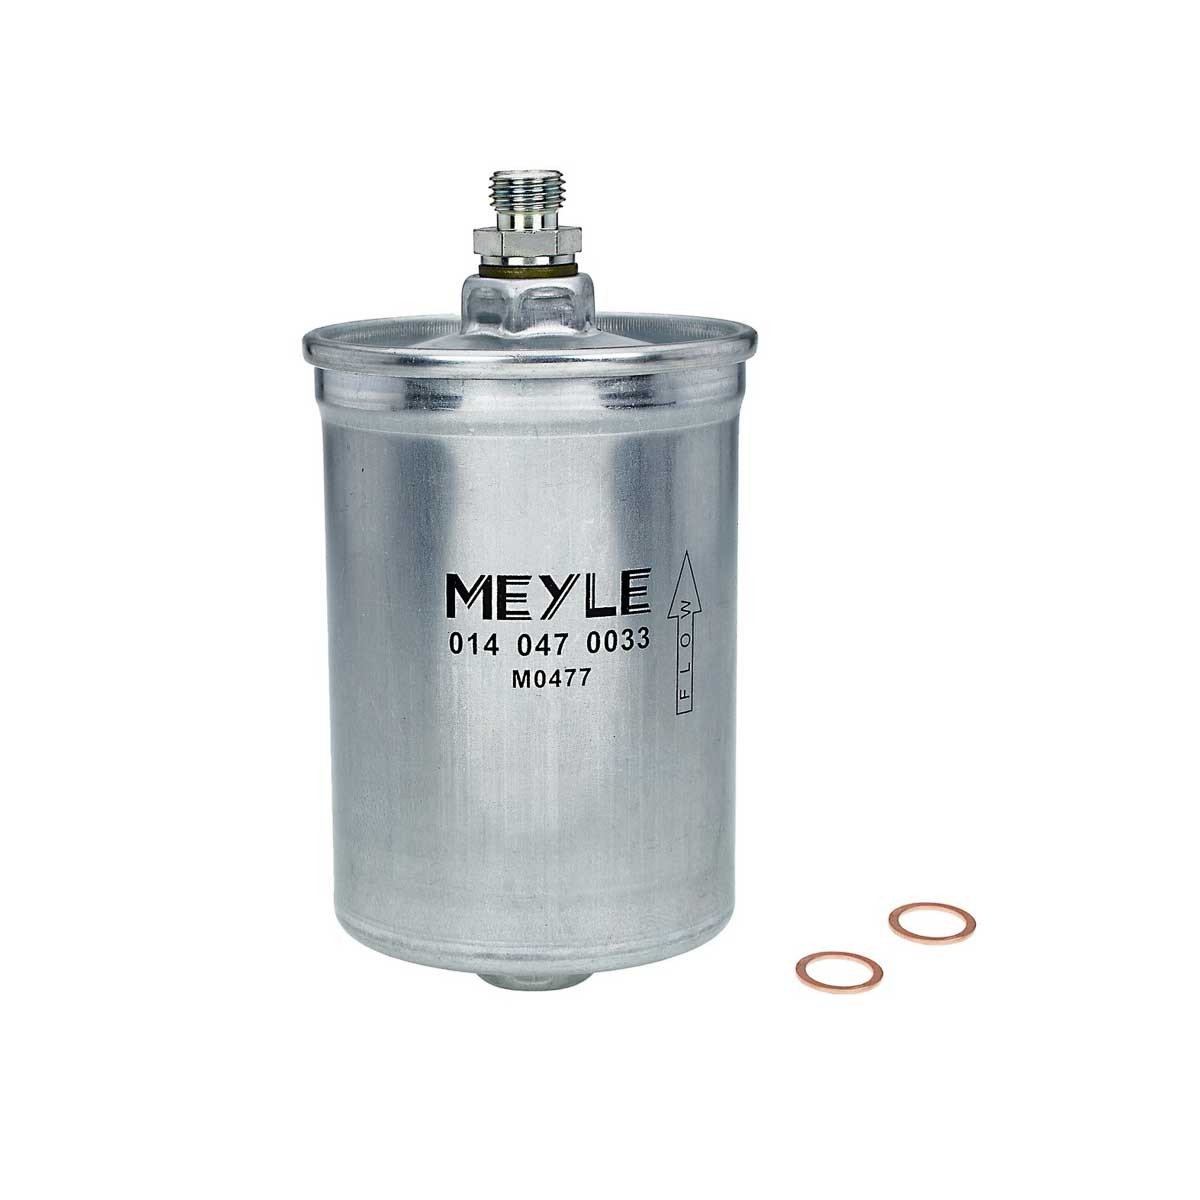 MEYLE 014 047 0033 Fuel filter Spin-on Filter, ORIGINAL Quality